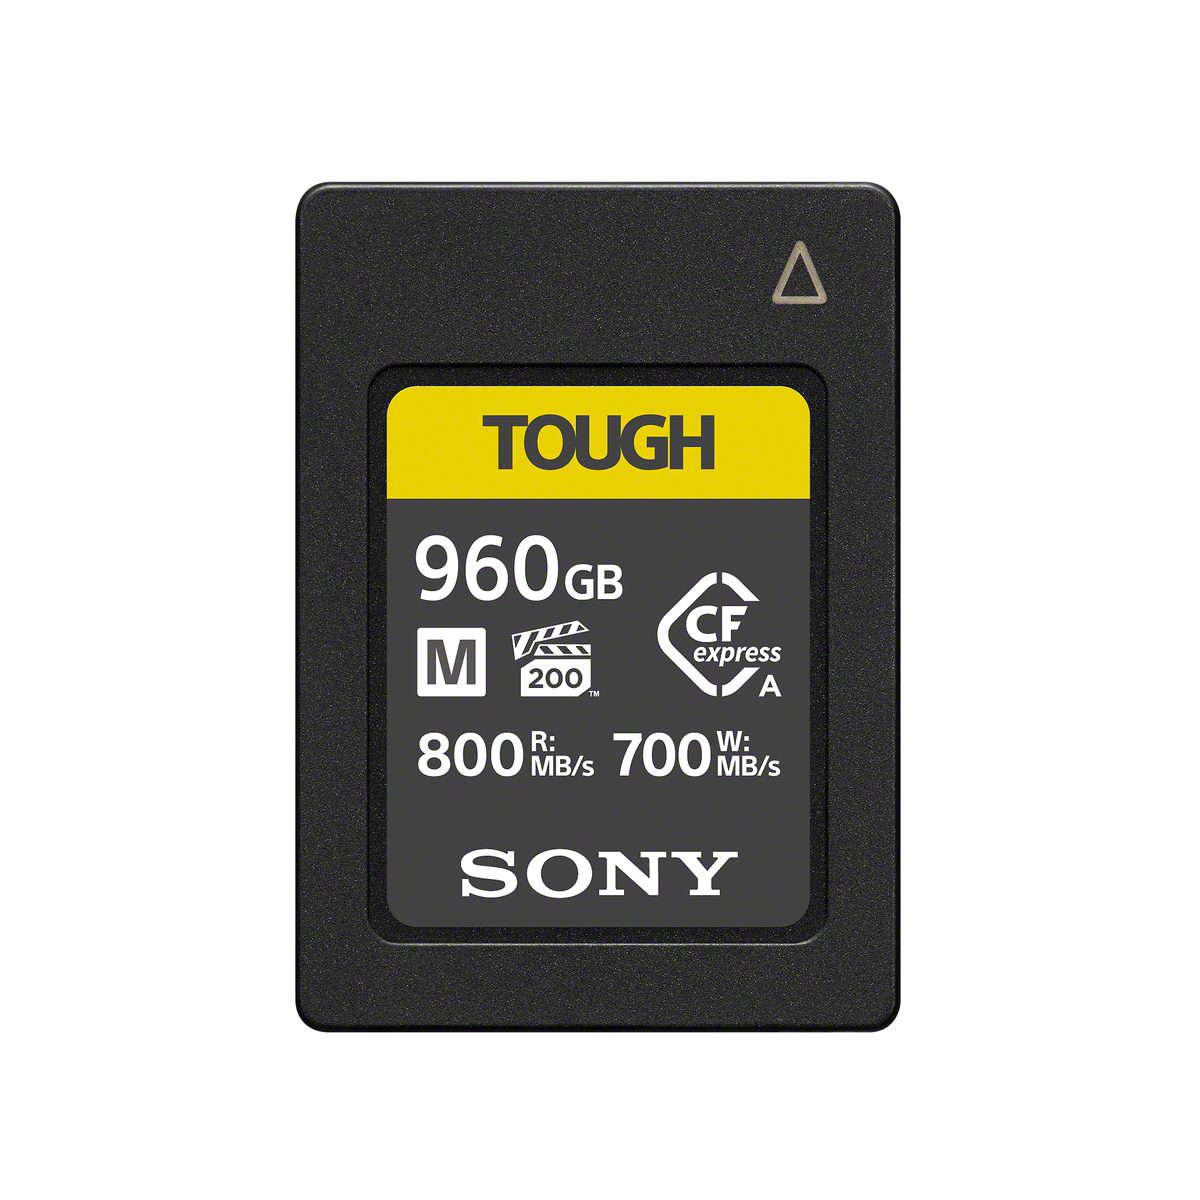 THOUGH CFexpress Type A 960GB